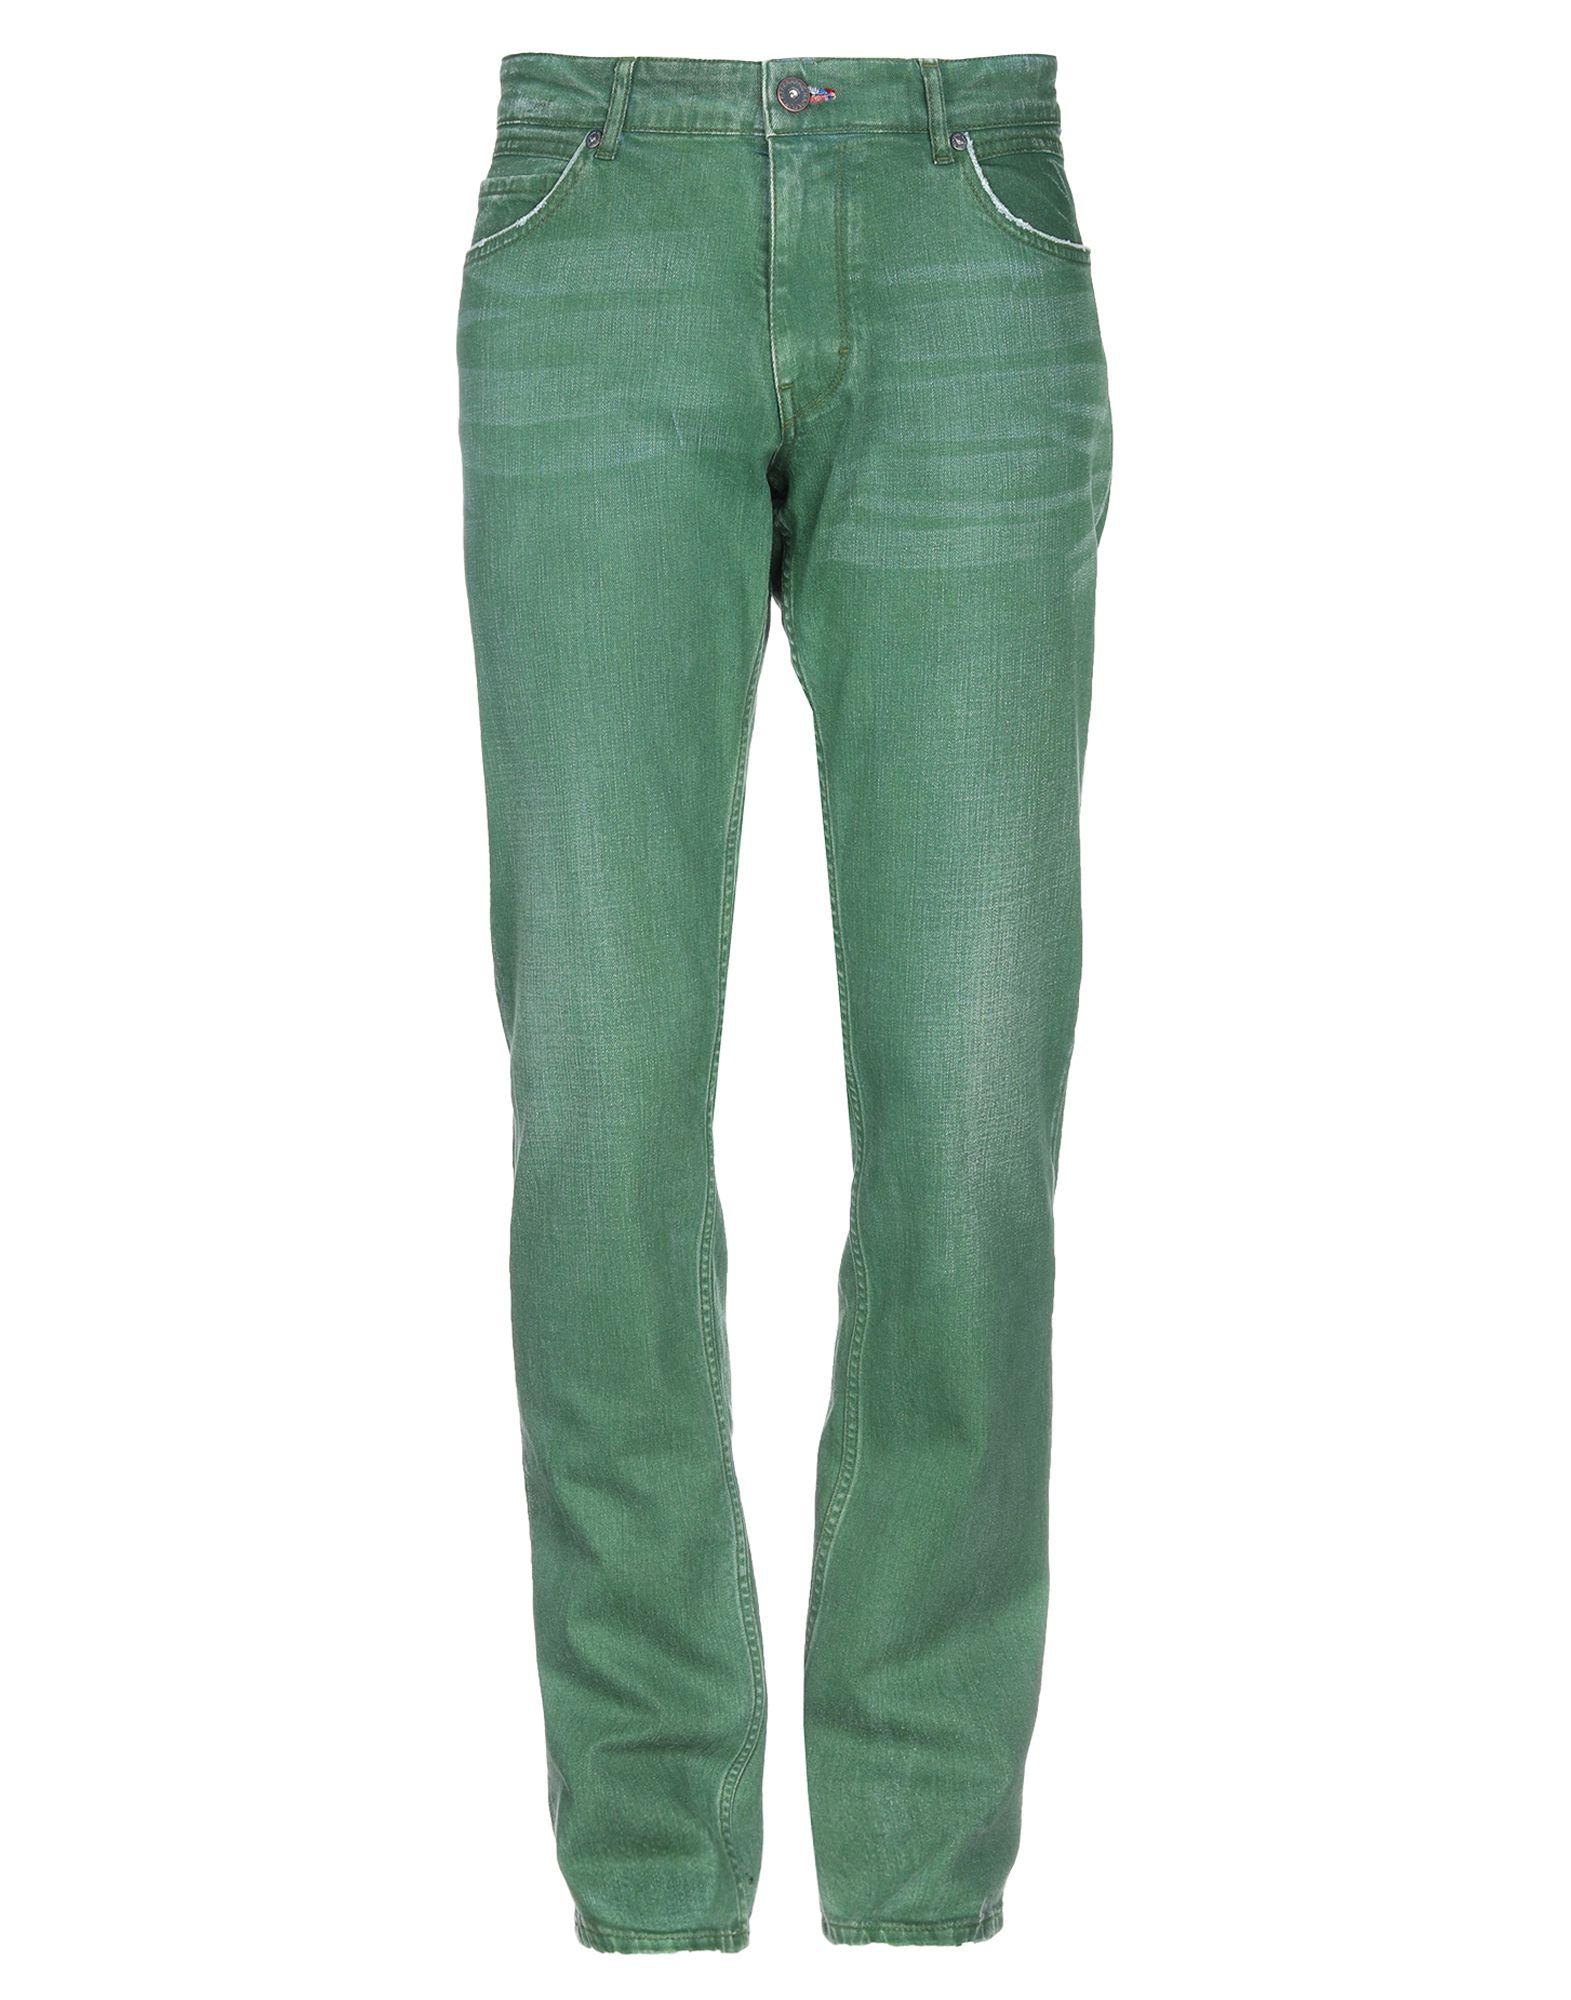 Napapijri Denim Pants in Green for Men - Lyst